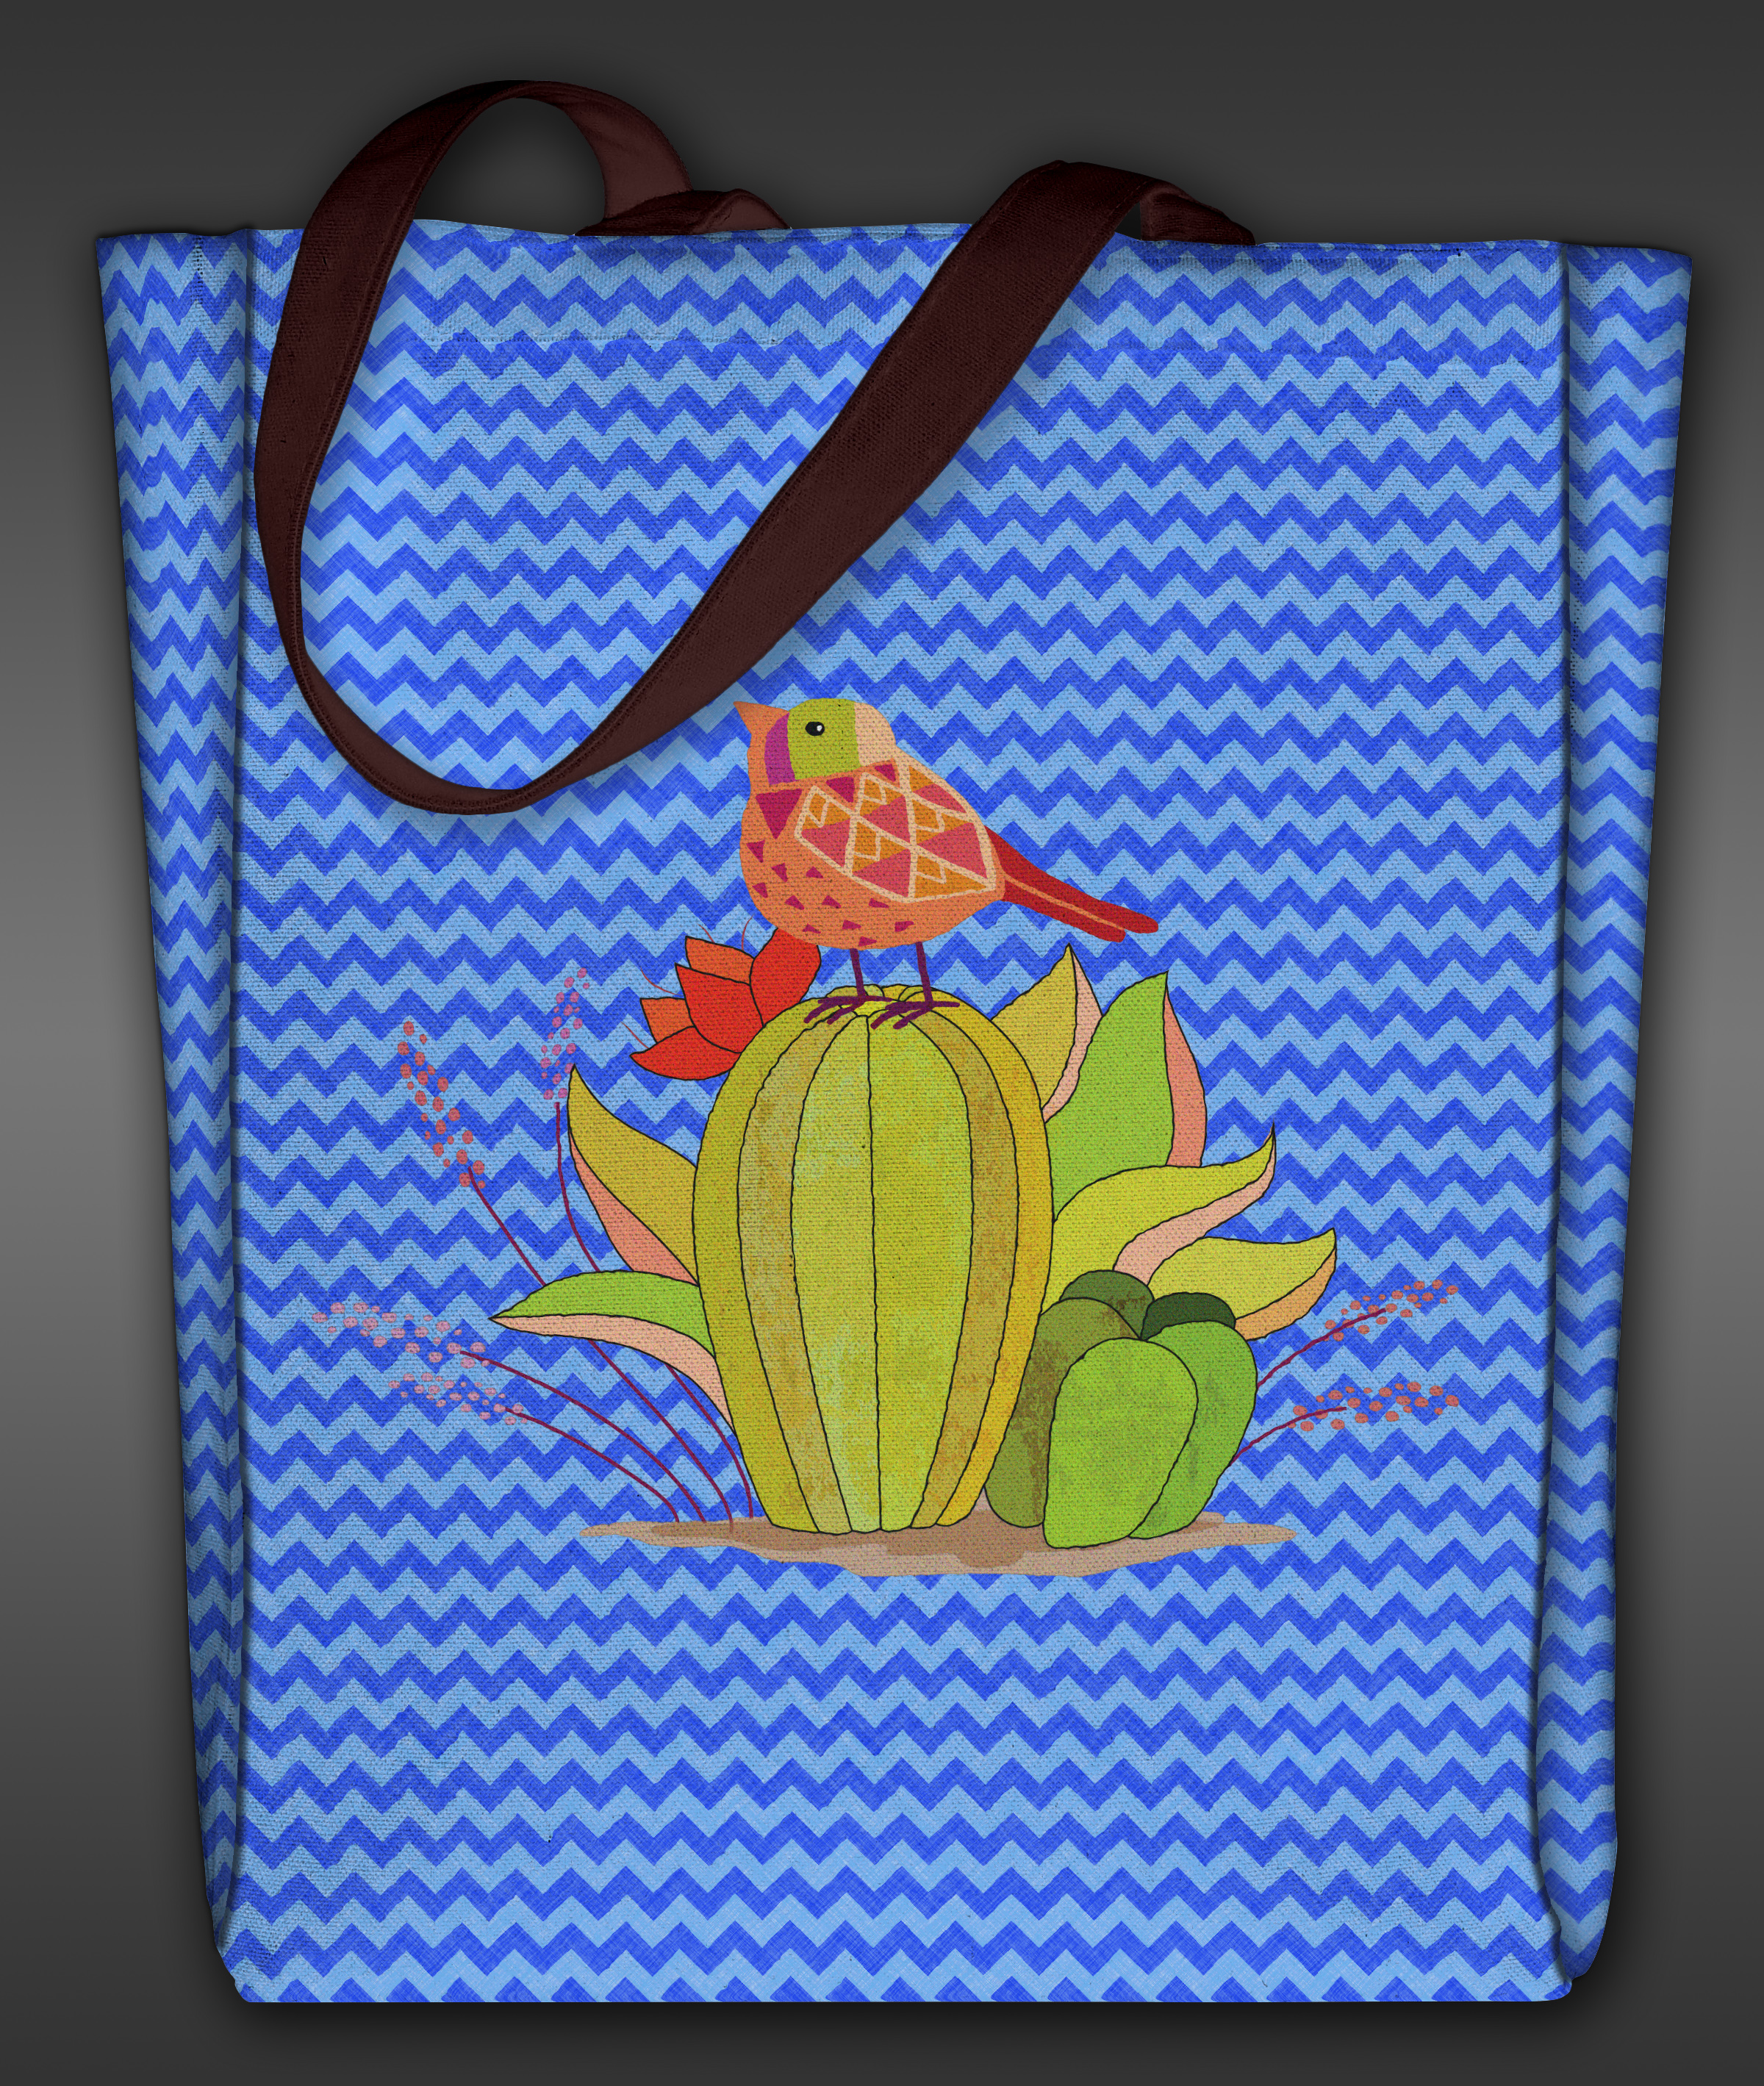 Tote Bag Mockup Creator by Jipito | GraphicRiver